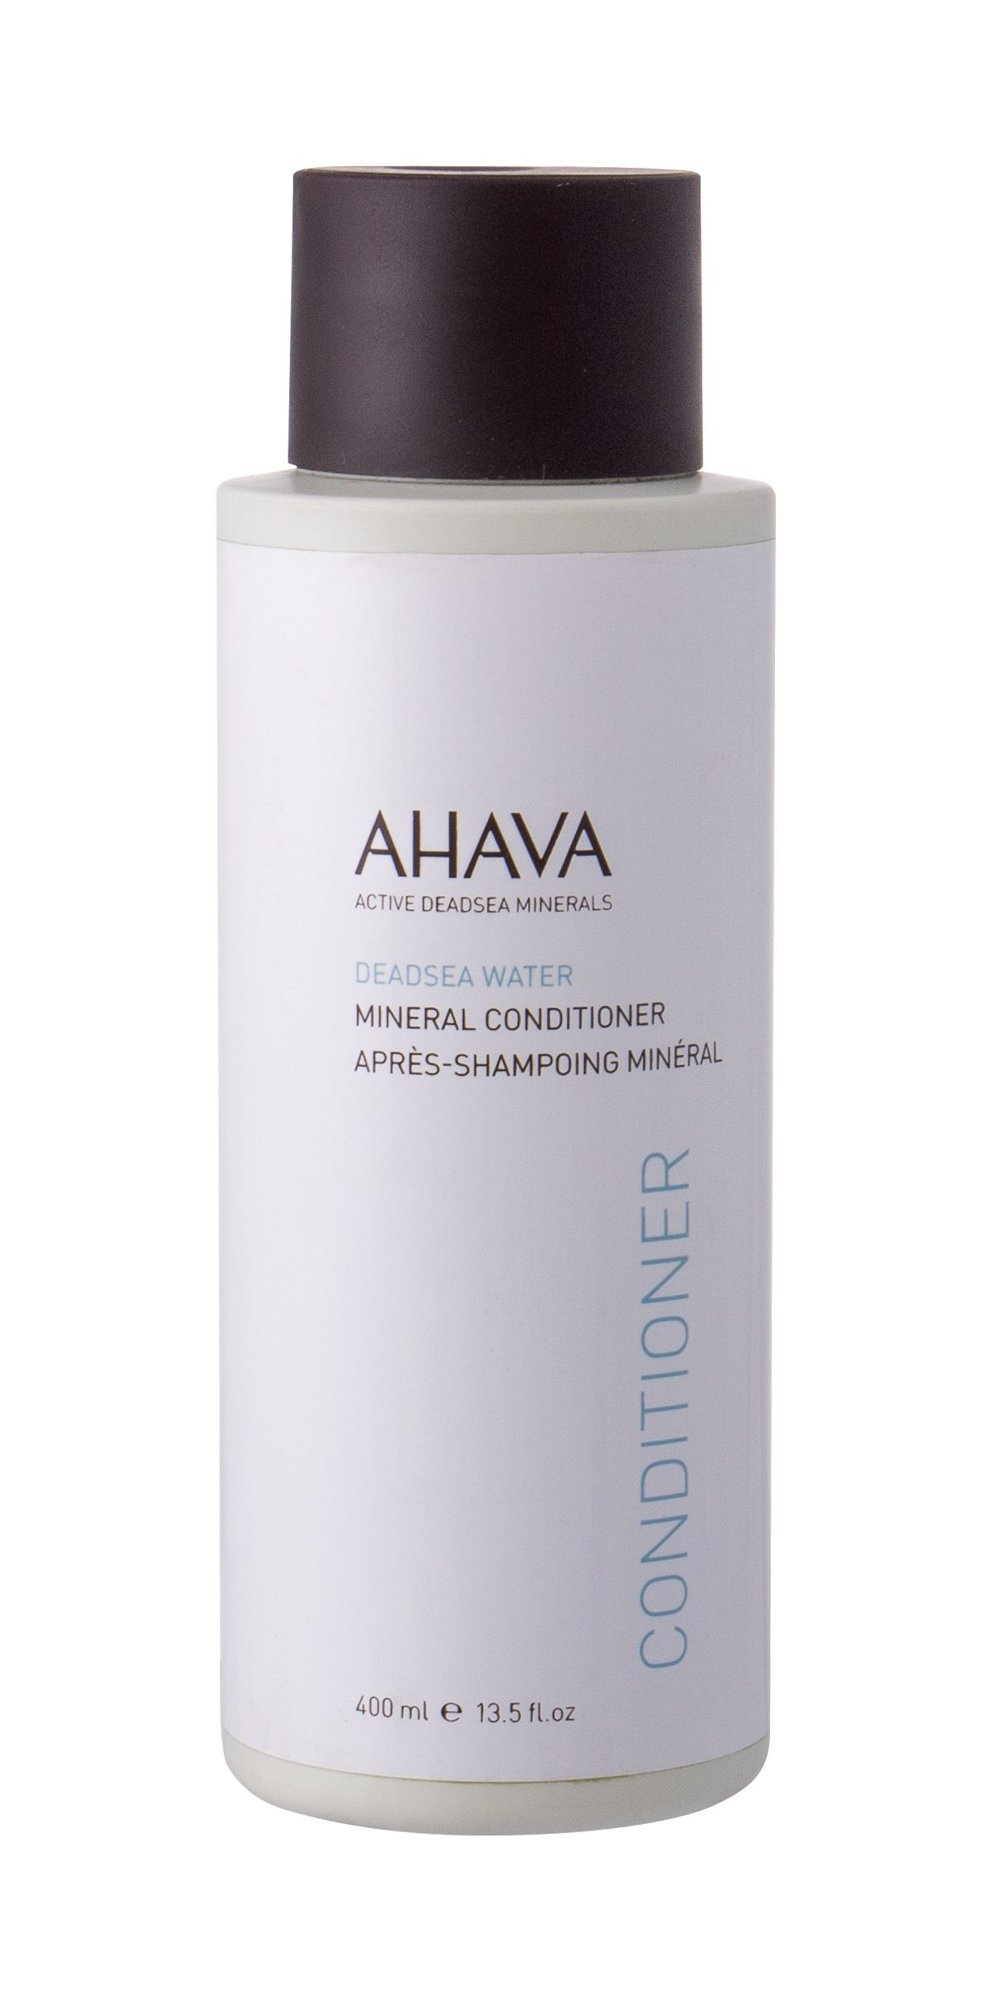 AHAVA Deadsea Water Mineral Conditioner 400ml kondicionierius